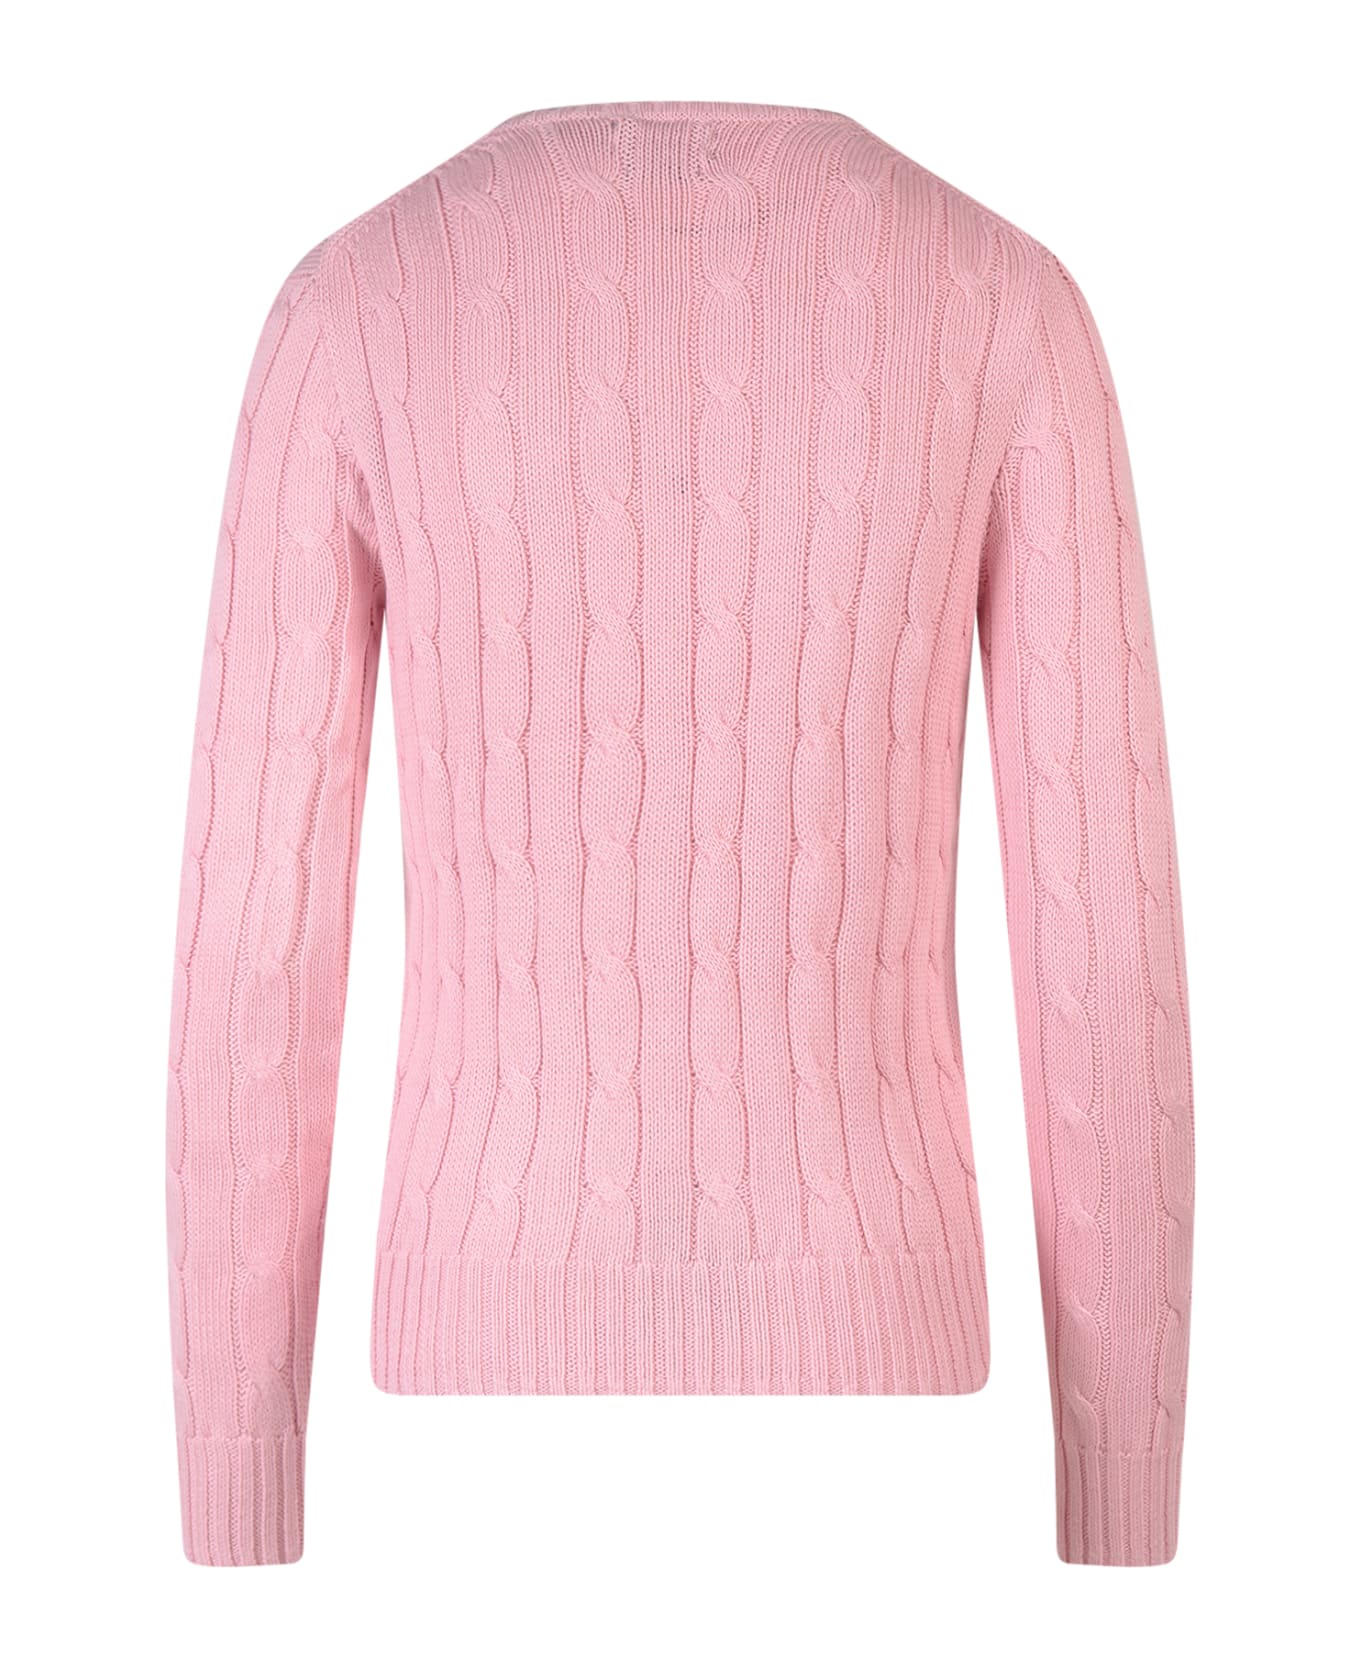 Ralph Lauren Sweater - PINK